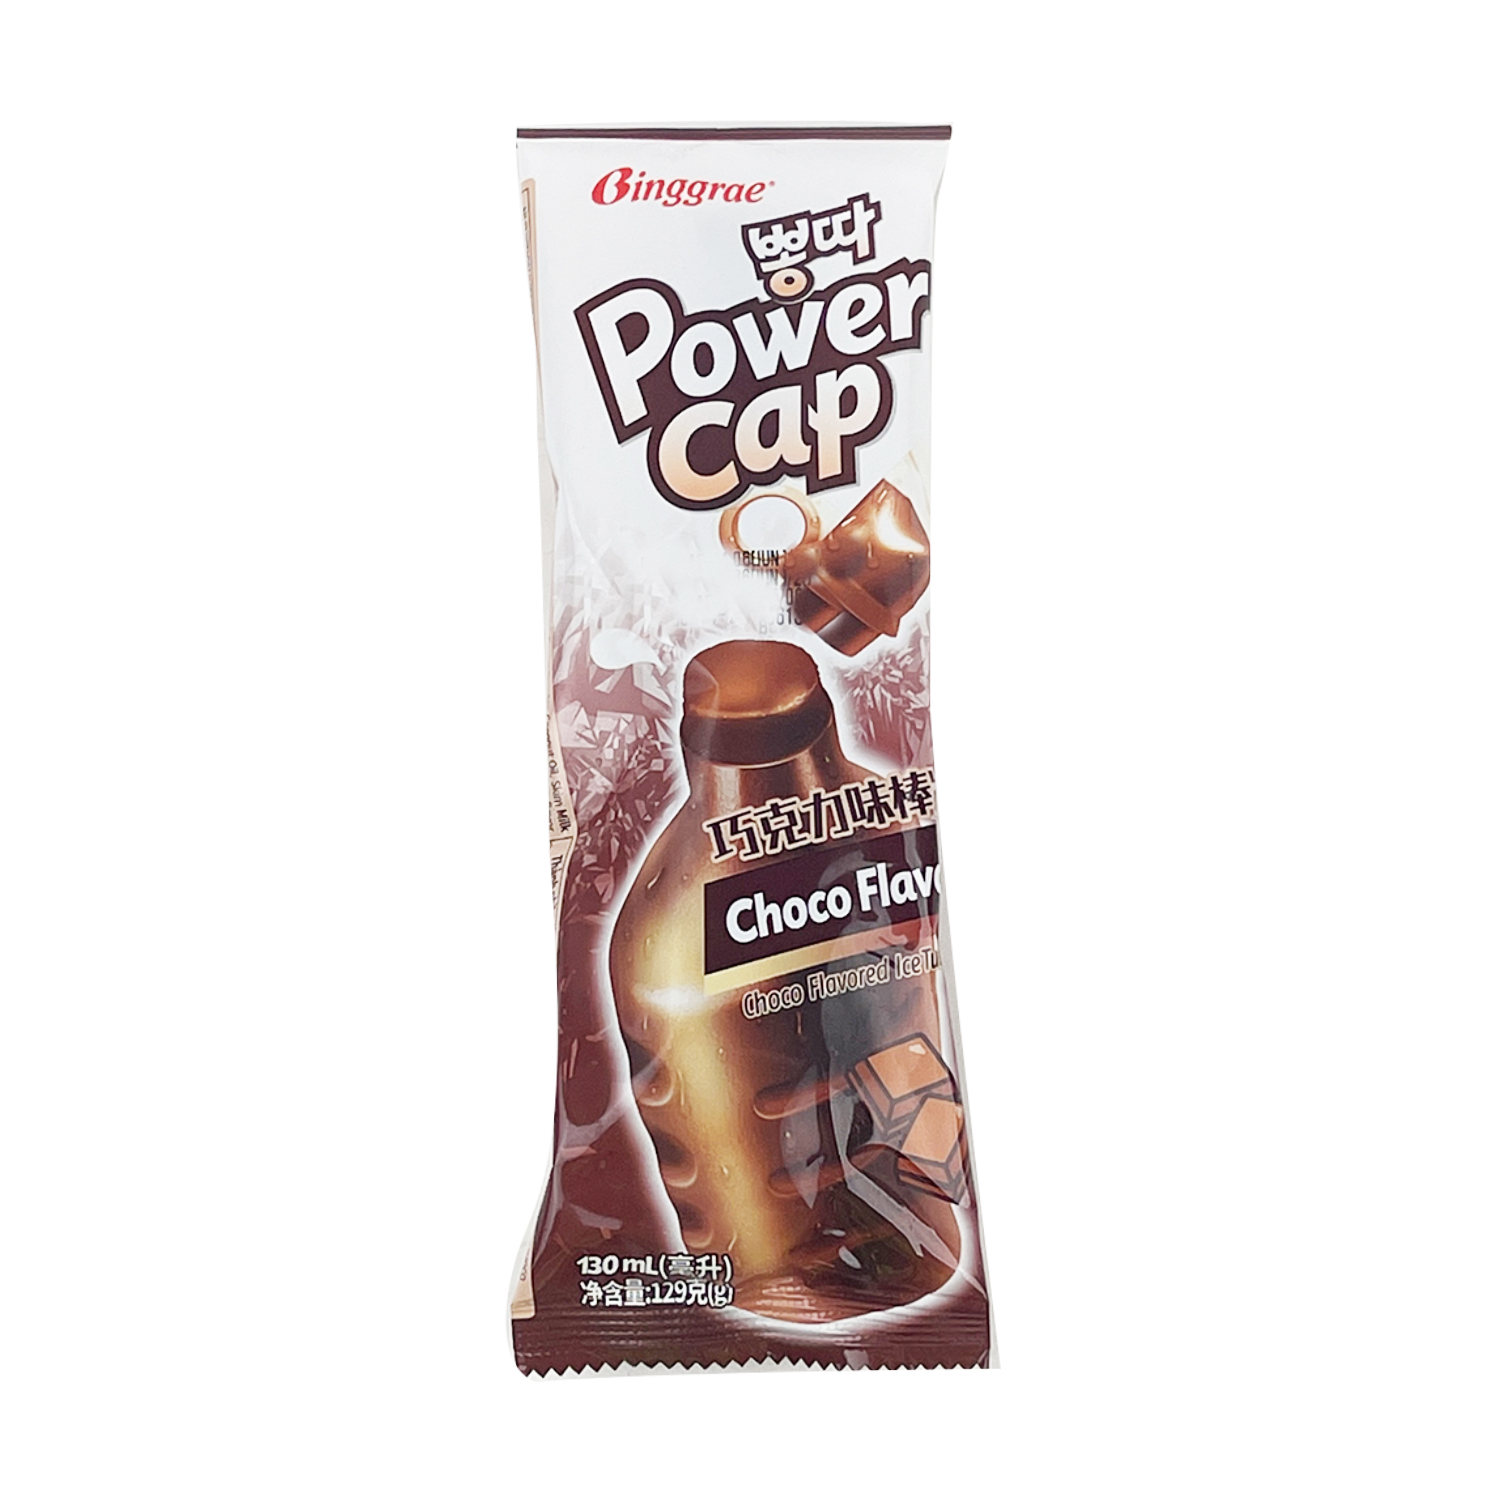 Binggrae Power Cap Popsicle Chocolate Ice Bar 130ml-eBest-Ice cream,Snacks & Confectionery